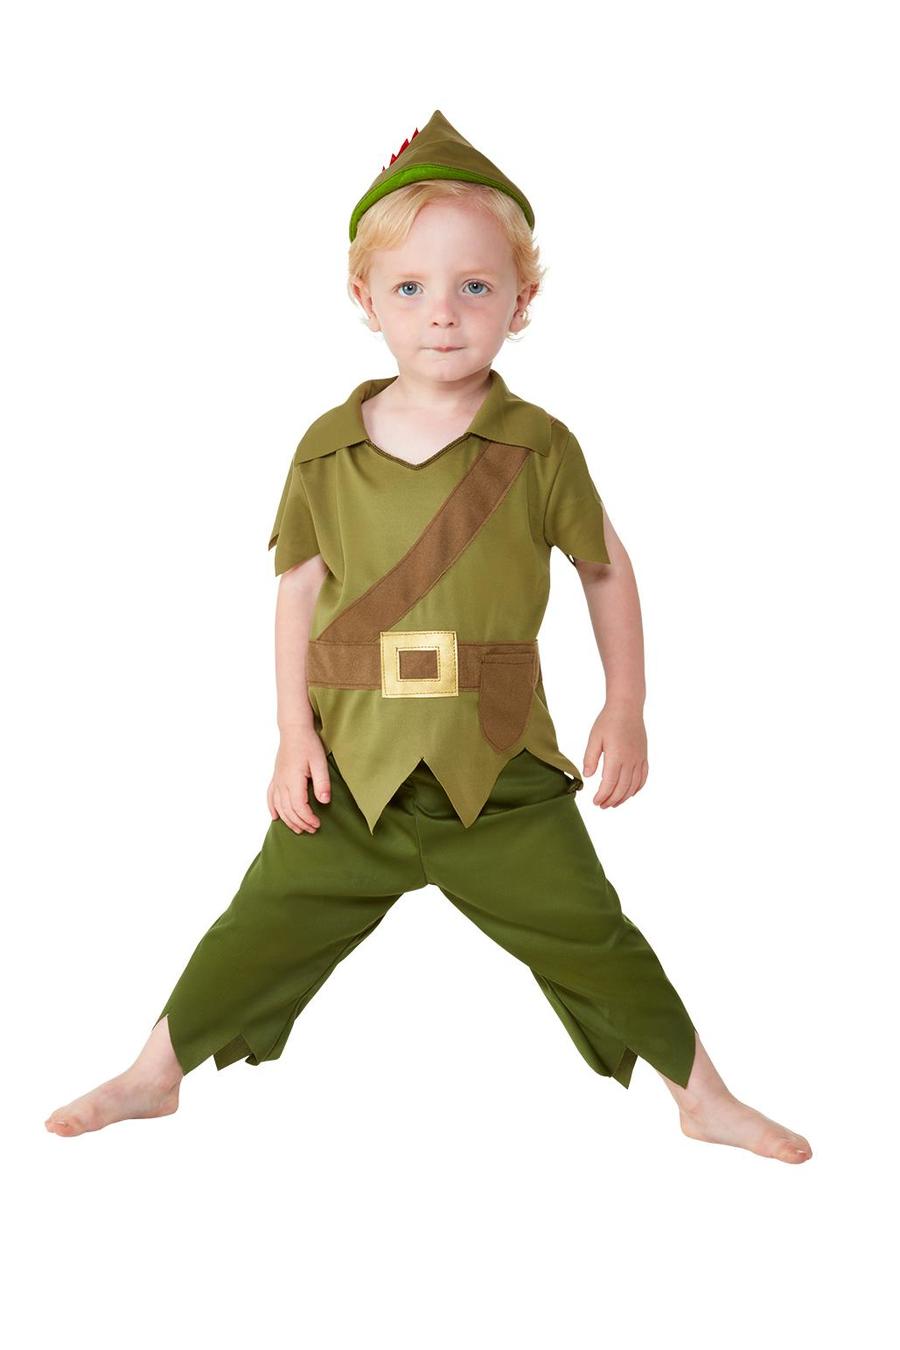 Toddler Robin Hood Costume Wholesale